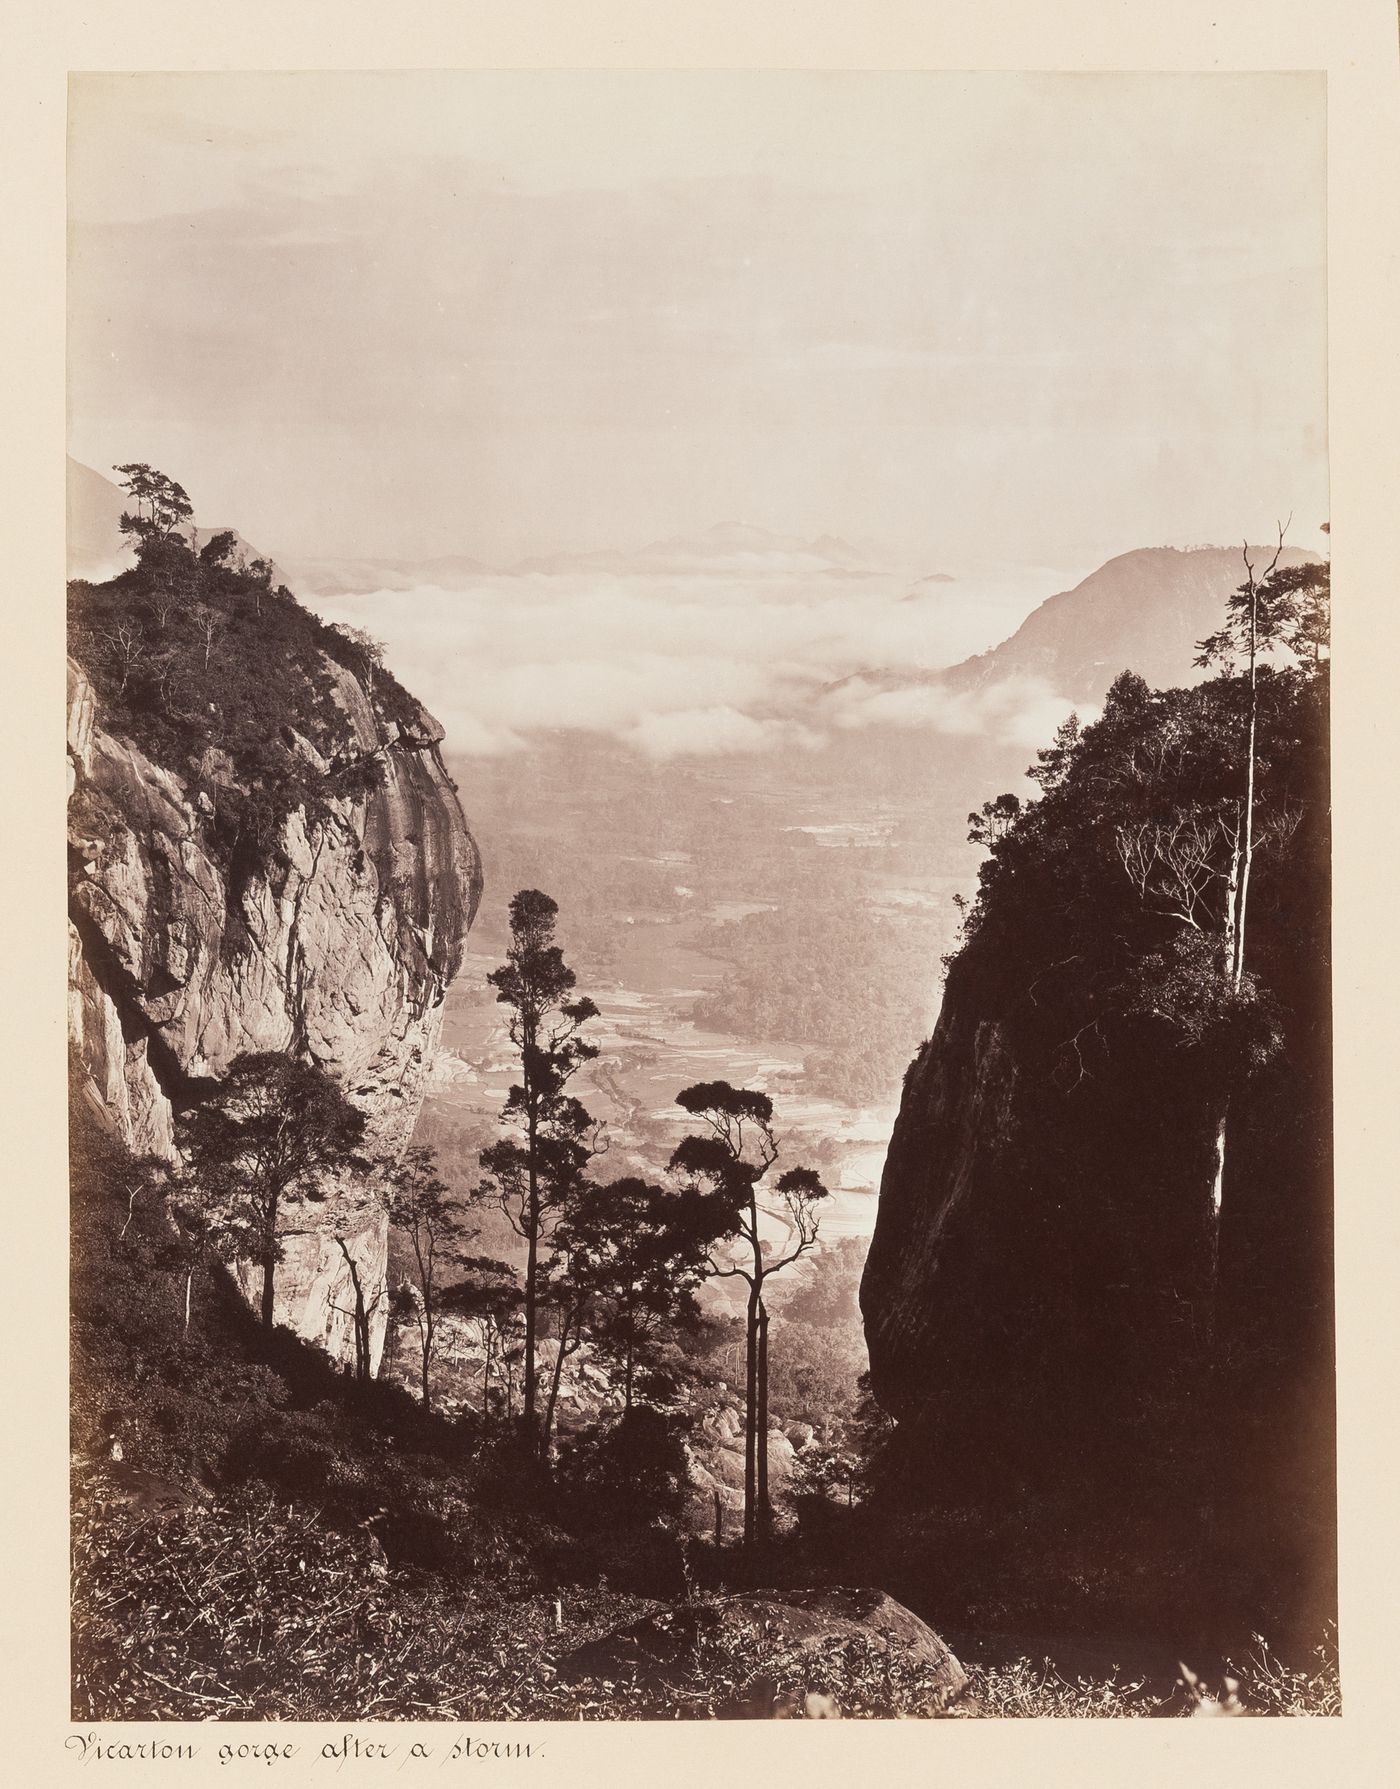 View of Vicarton Gorge, Matale (District), Ceylon (now Sri Lanka)